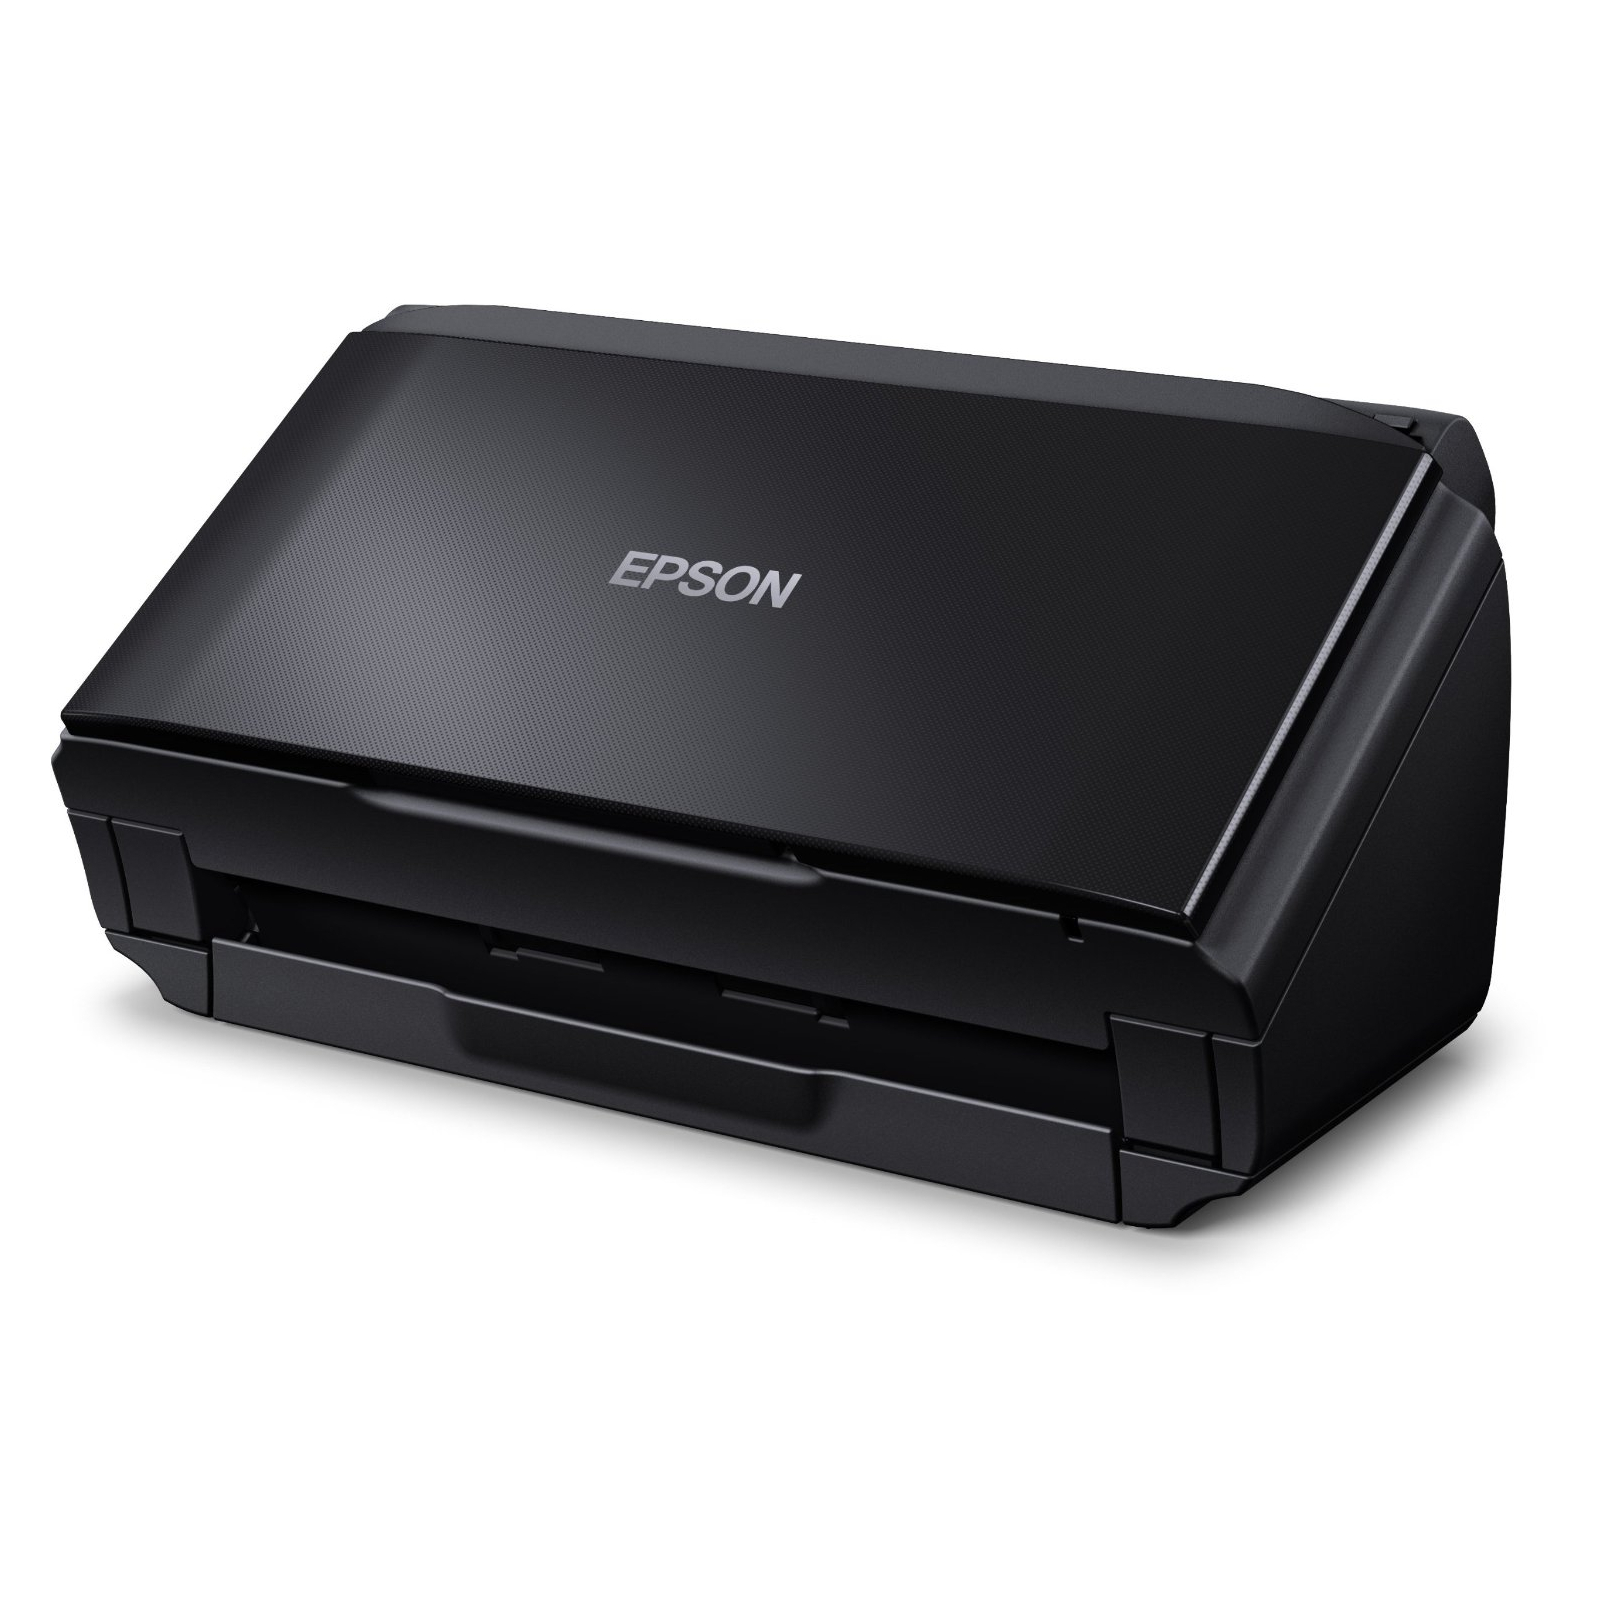 Сканер Epson WorkForce DS-560 c WI-FI (B11B221401)